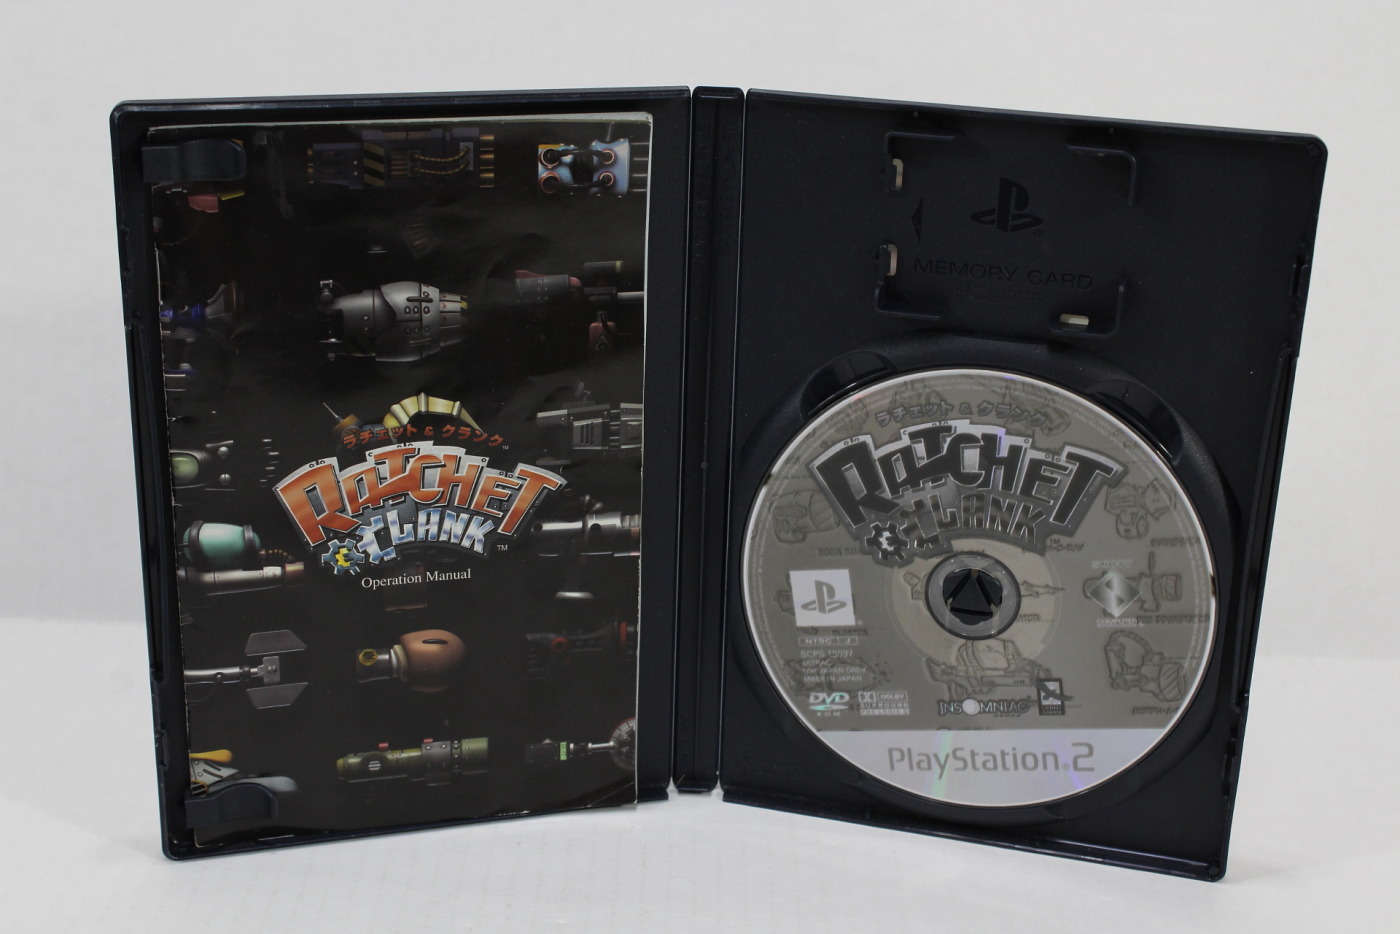 Ratchet & Clank 1 (B) PS2 – Retro Games Japan